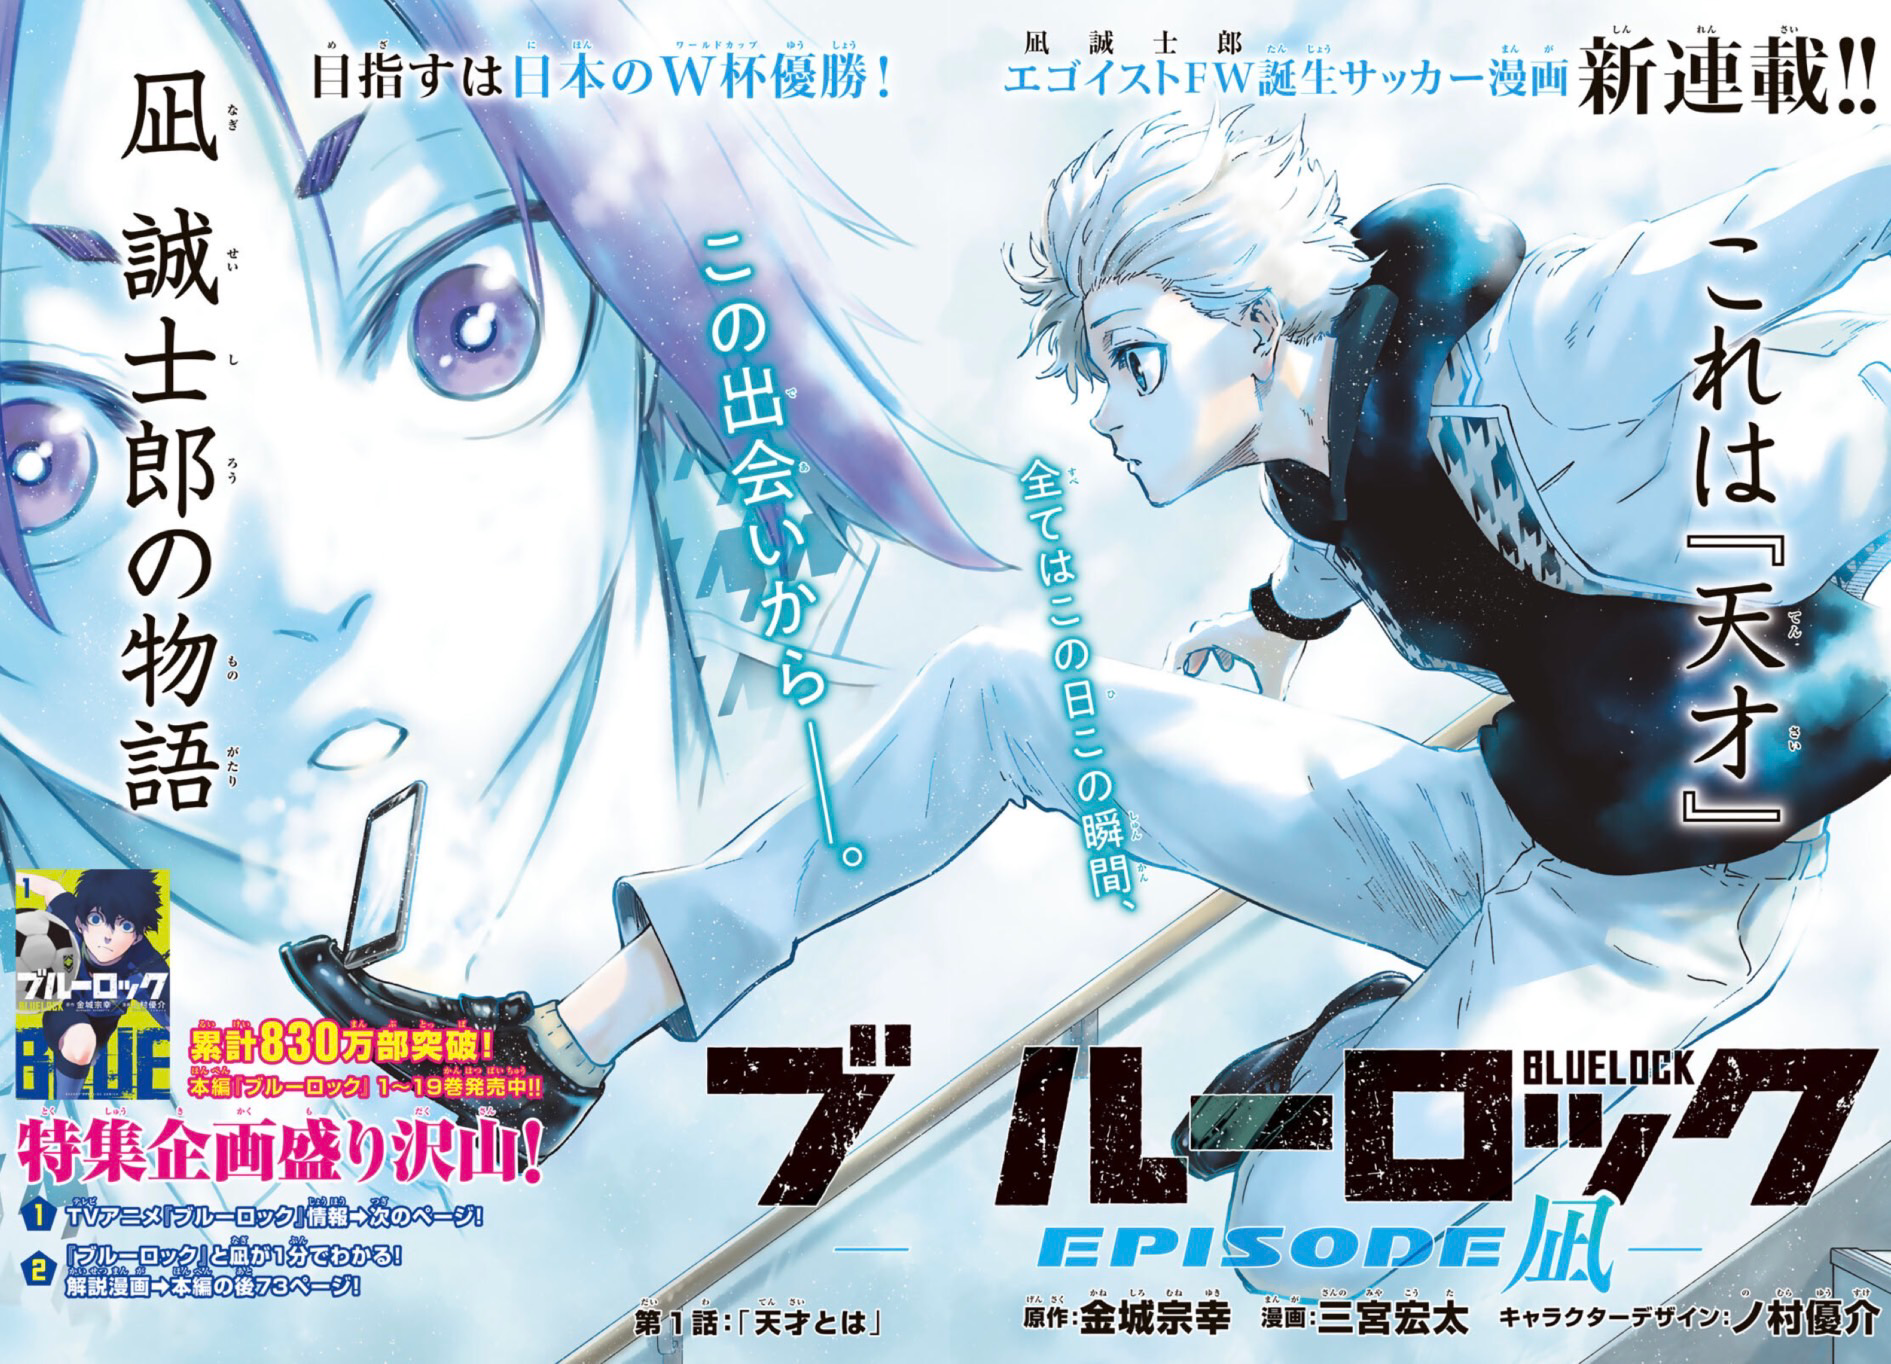 Chapter 1 (Episode Nagi), Blue Lock Wiki